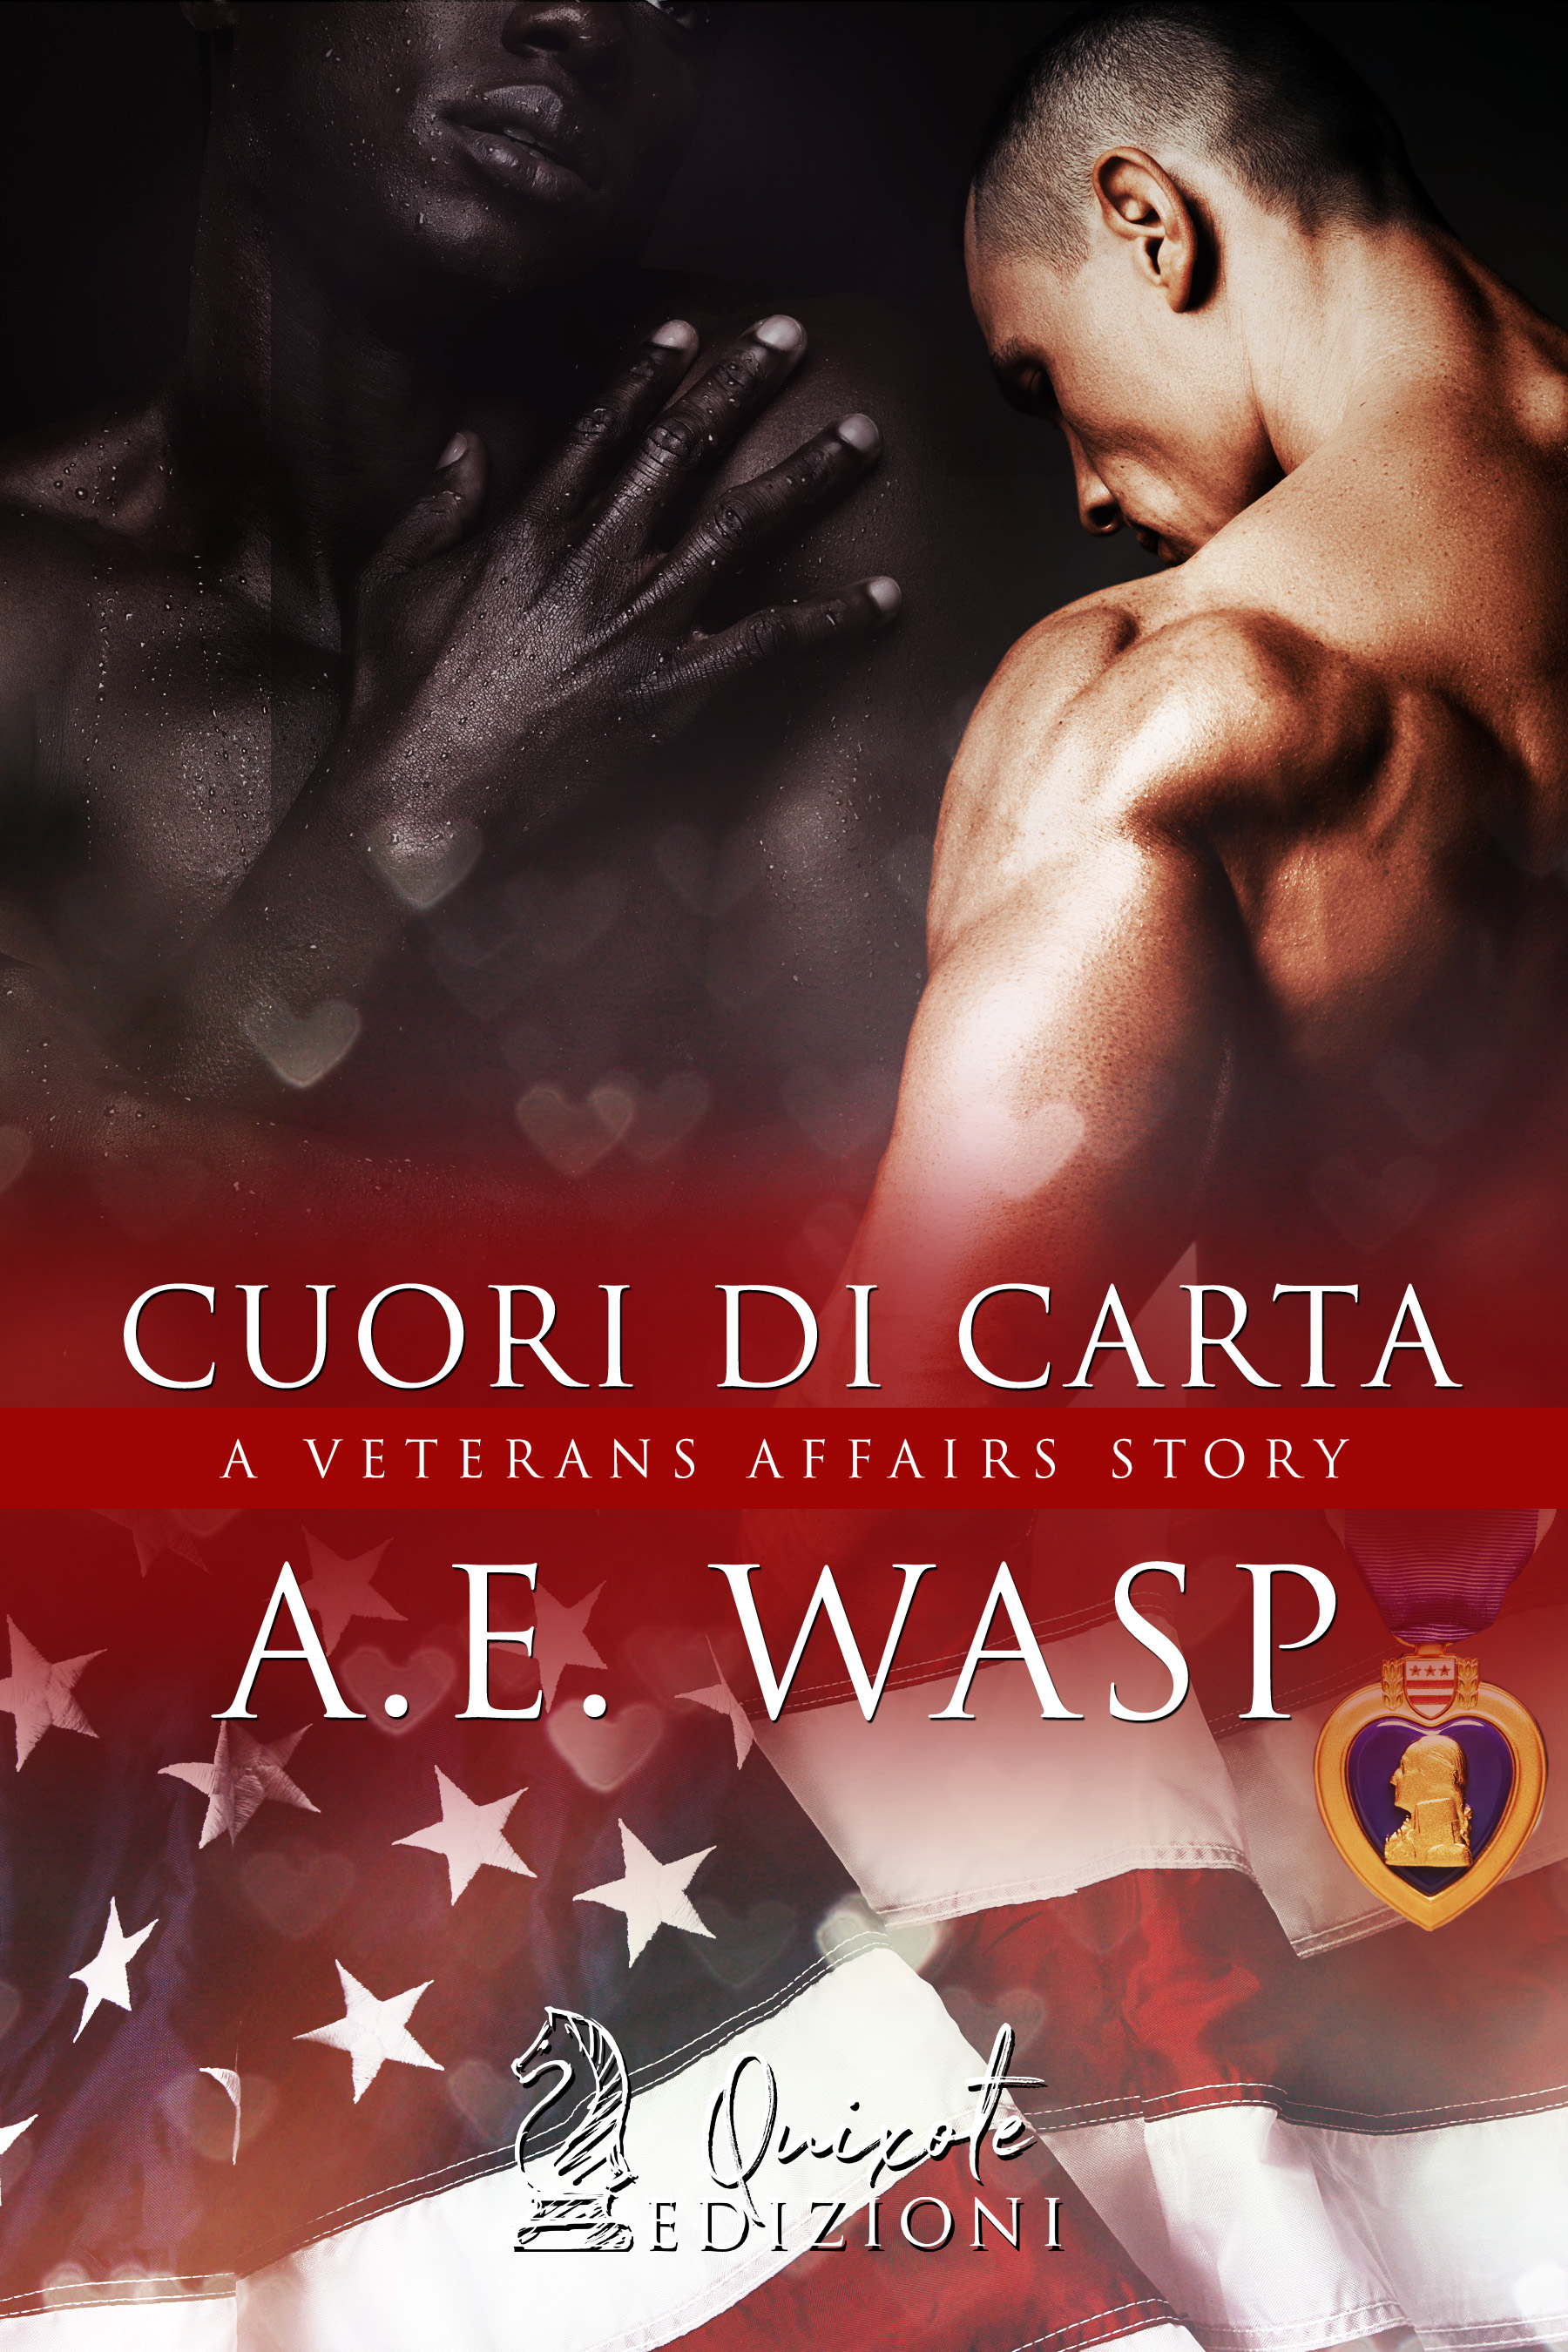 RECENSIONE IN ANTEPRIMA: “CUORI DI CARTA” – Serie Veterans Affairs #3 – di  A.E. Wasp – 17 Giugno 2019